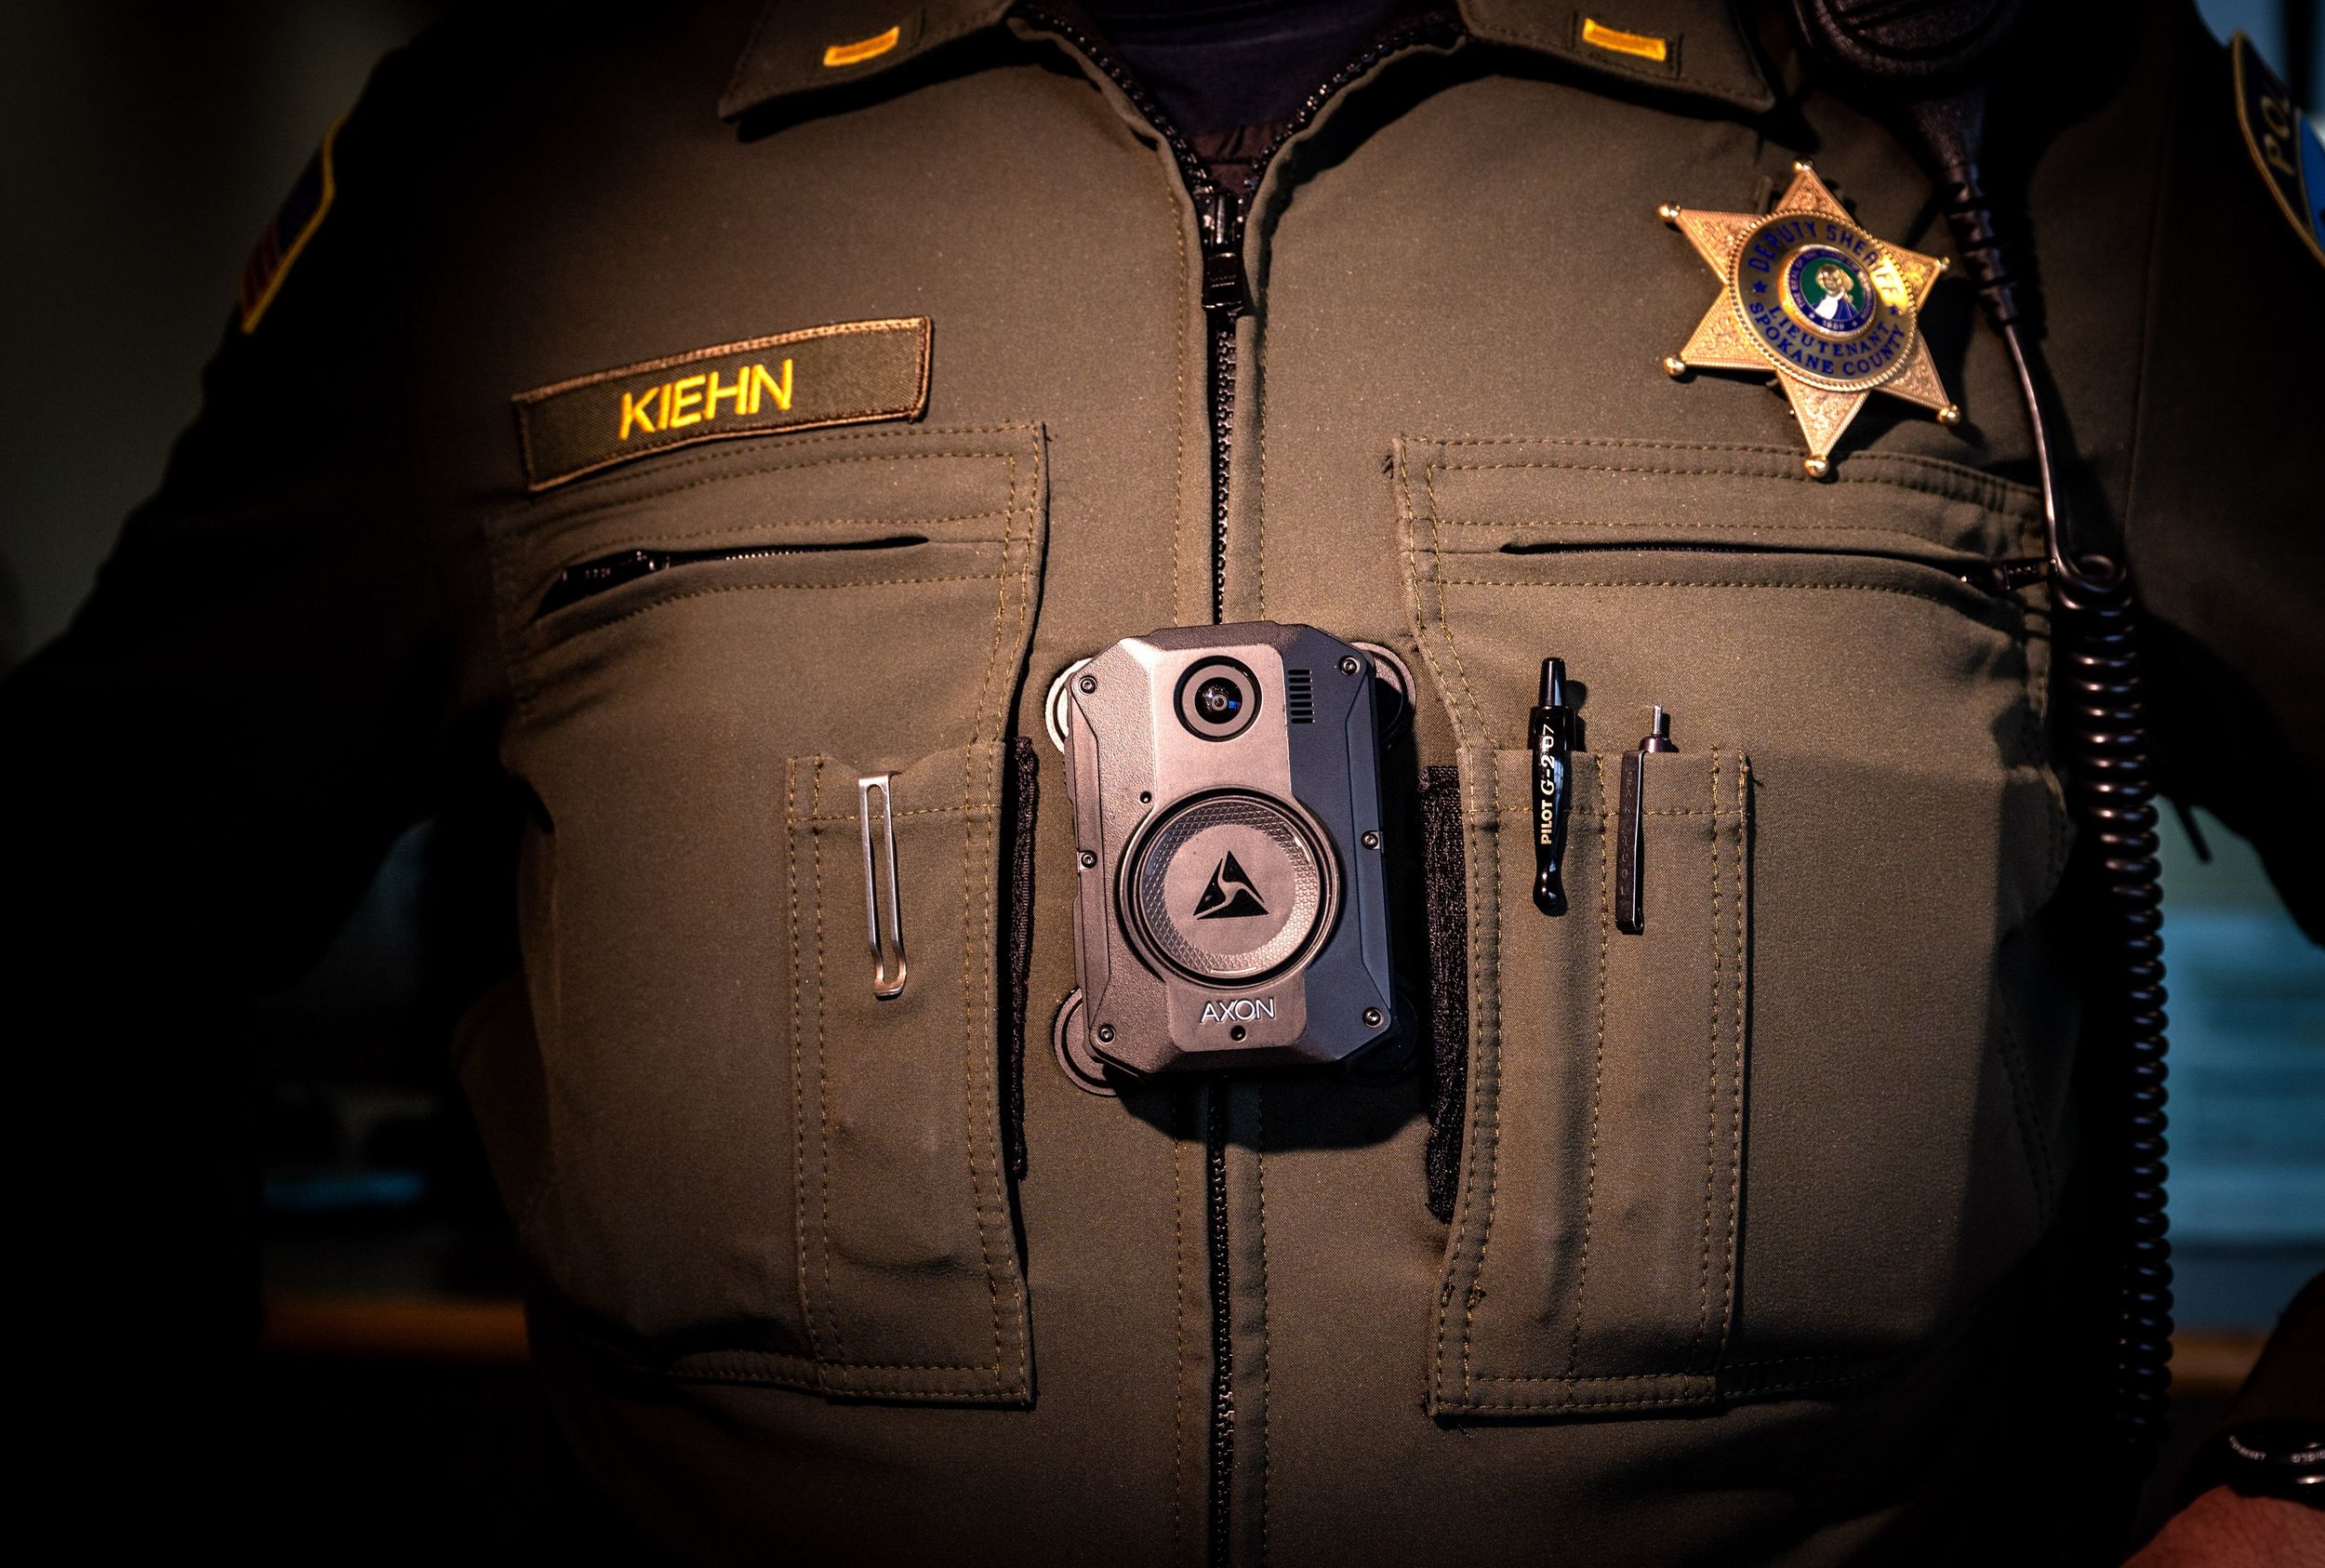 Spokane County Sheriff's Deputies began wearing body cameras at